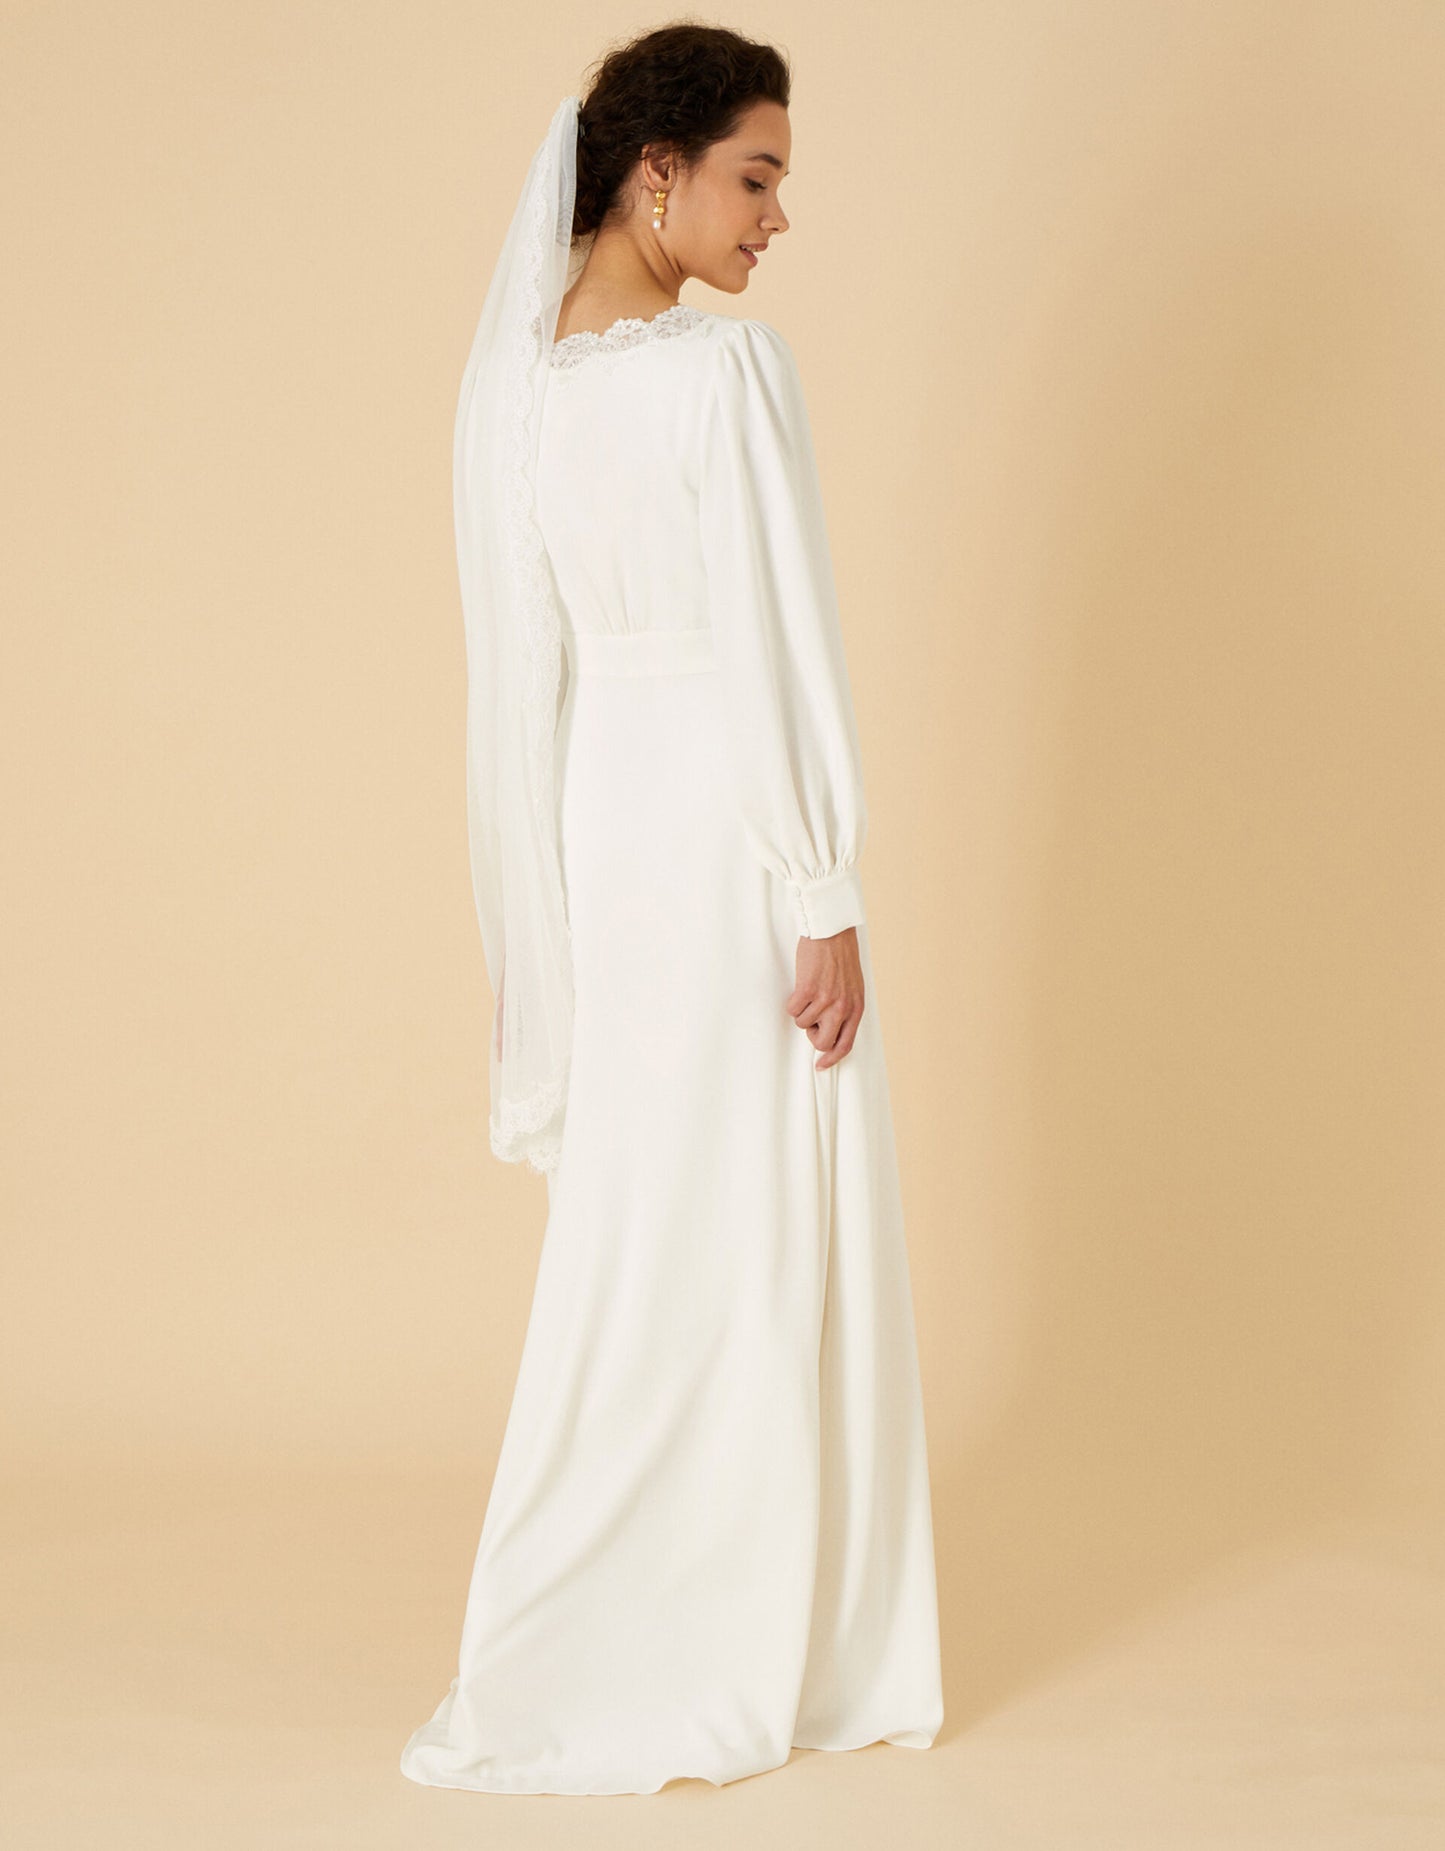 Cecilia long sleeve bridal lace dress ivory